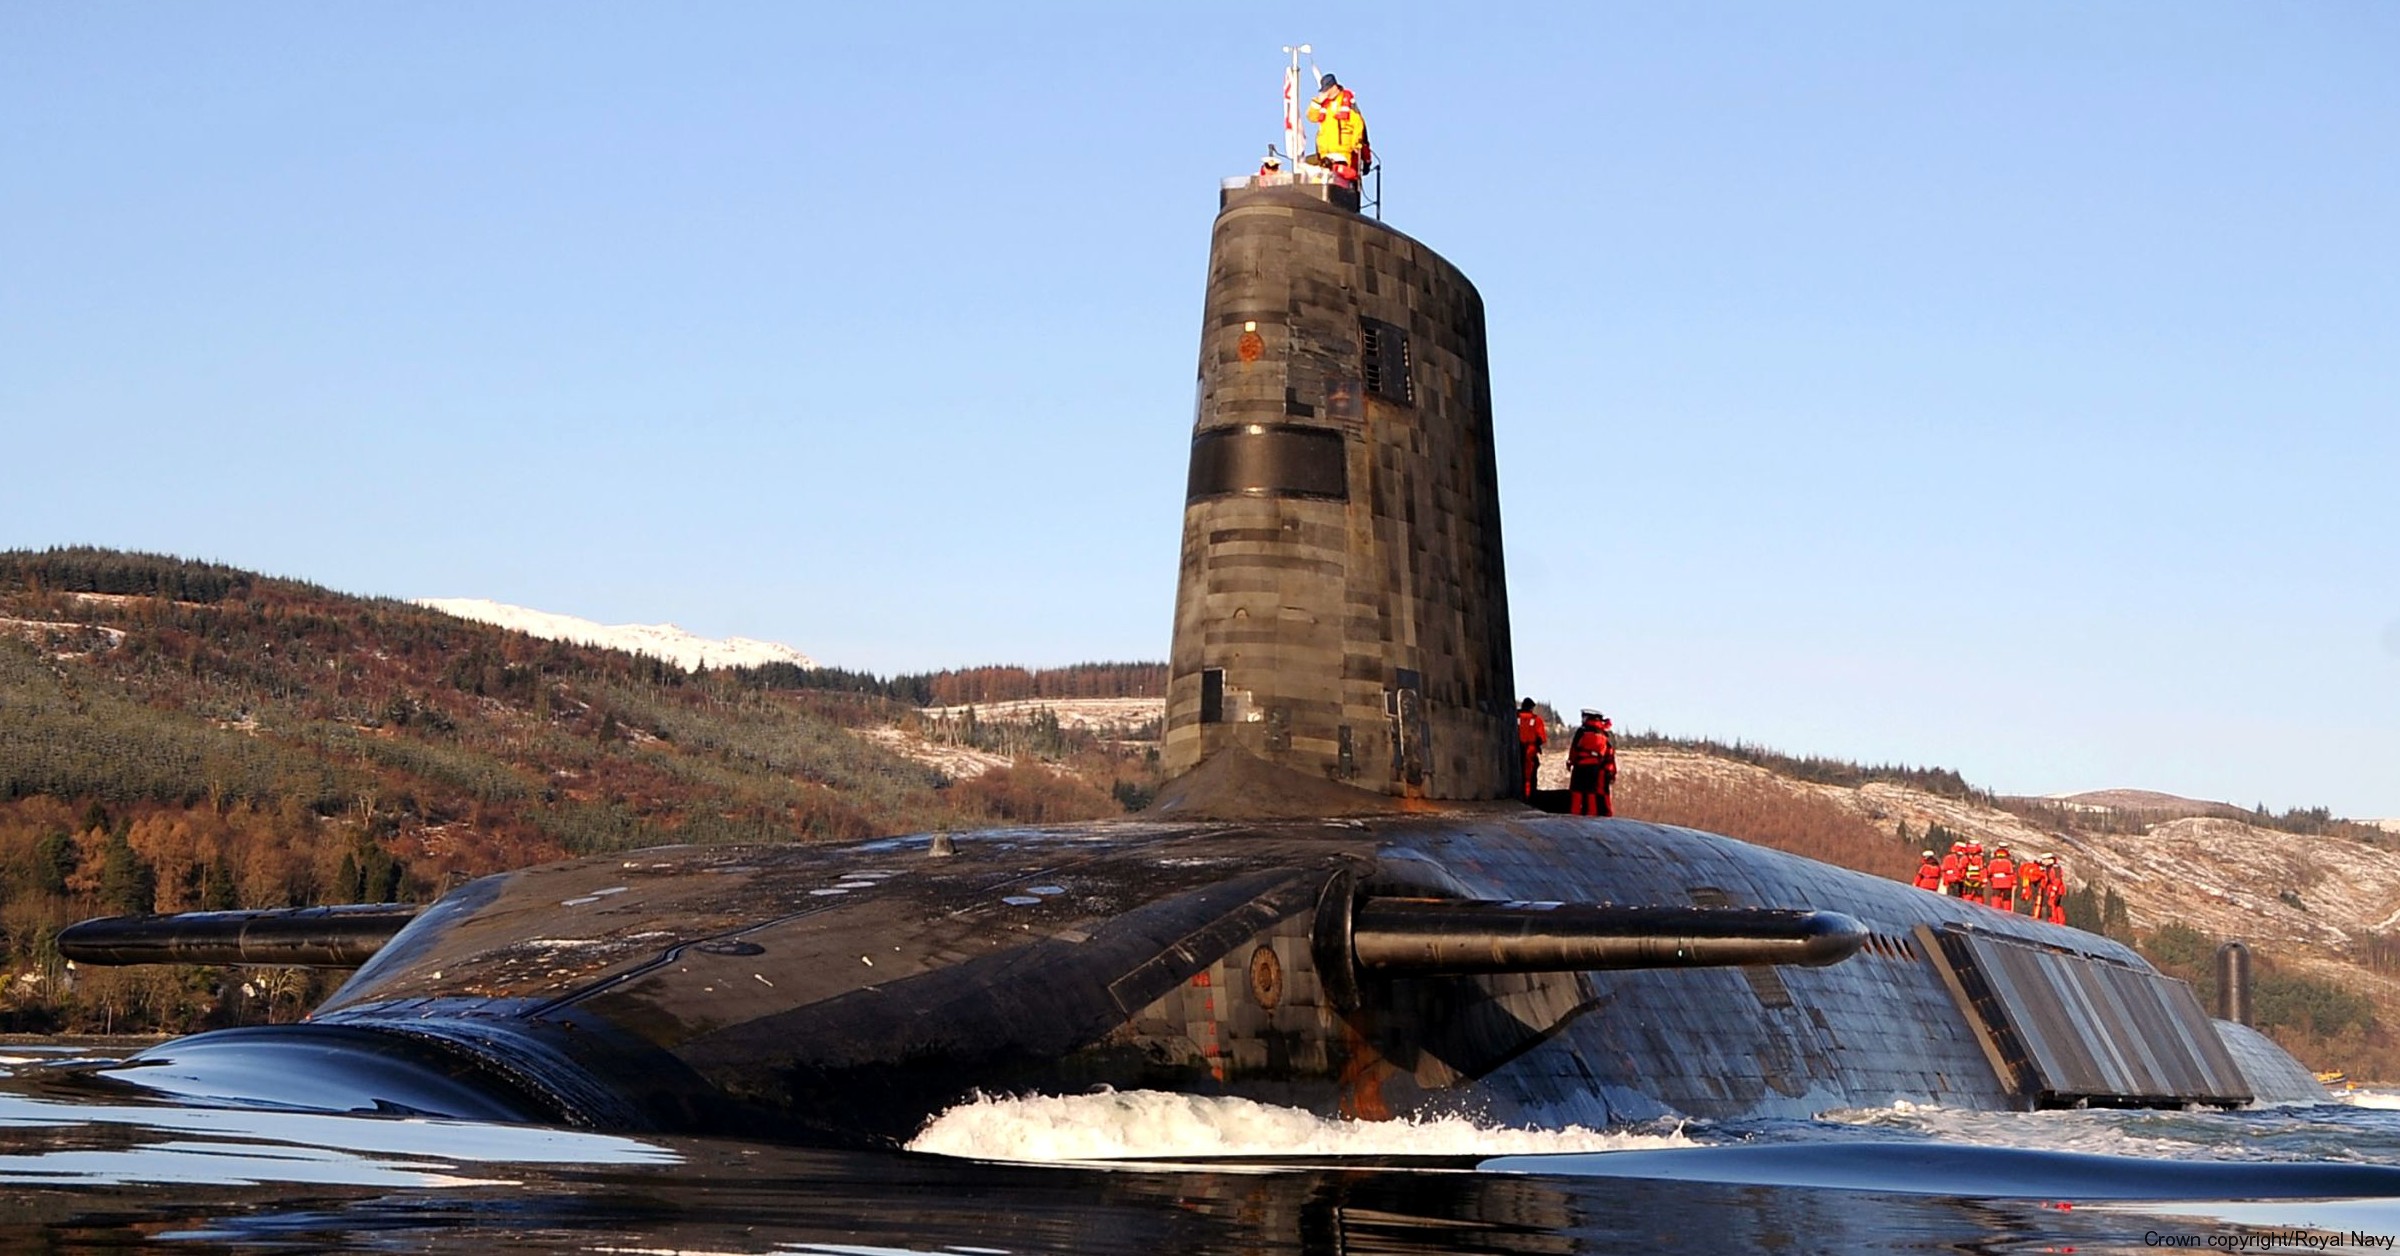 vanguard class ballistic missile submarine ssbn nuclear trident slbm royal navy 02c